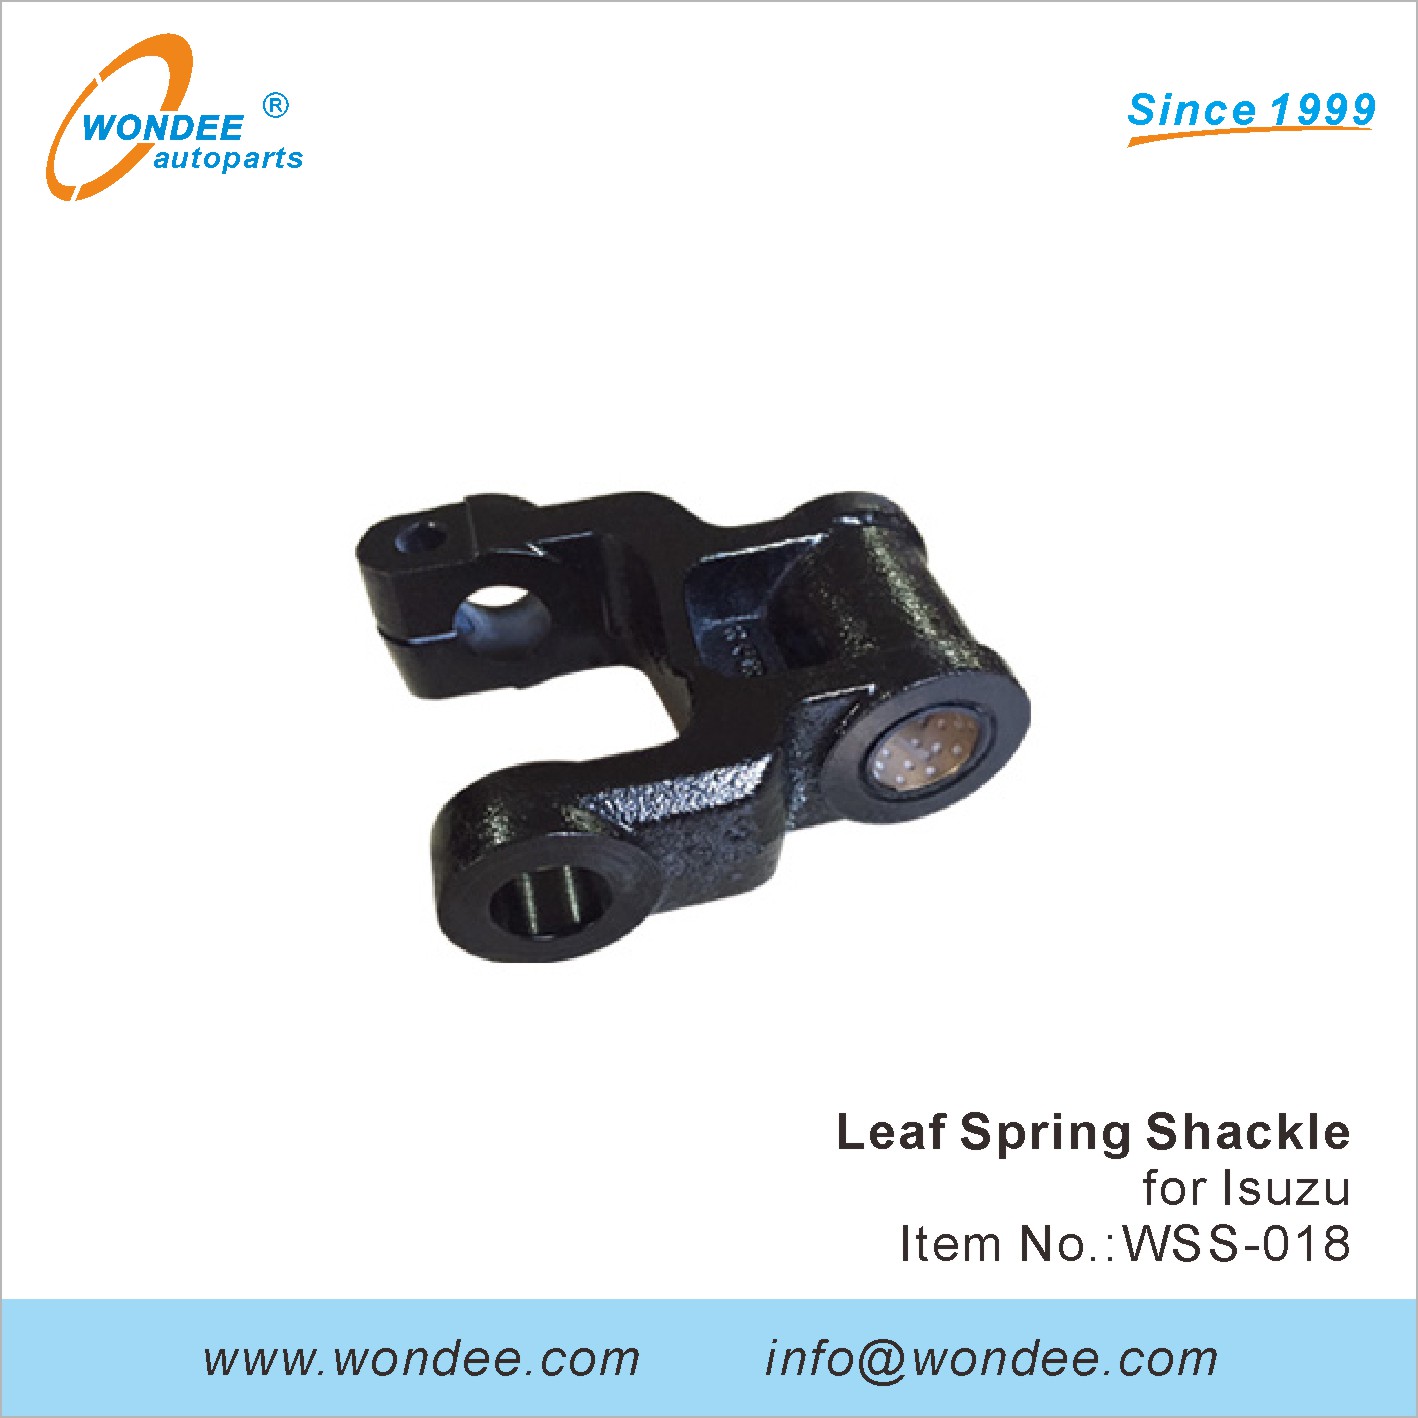 WONDEE leaf spring shackle (18)